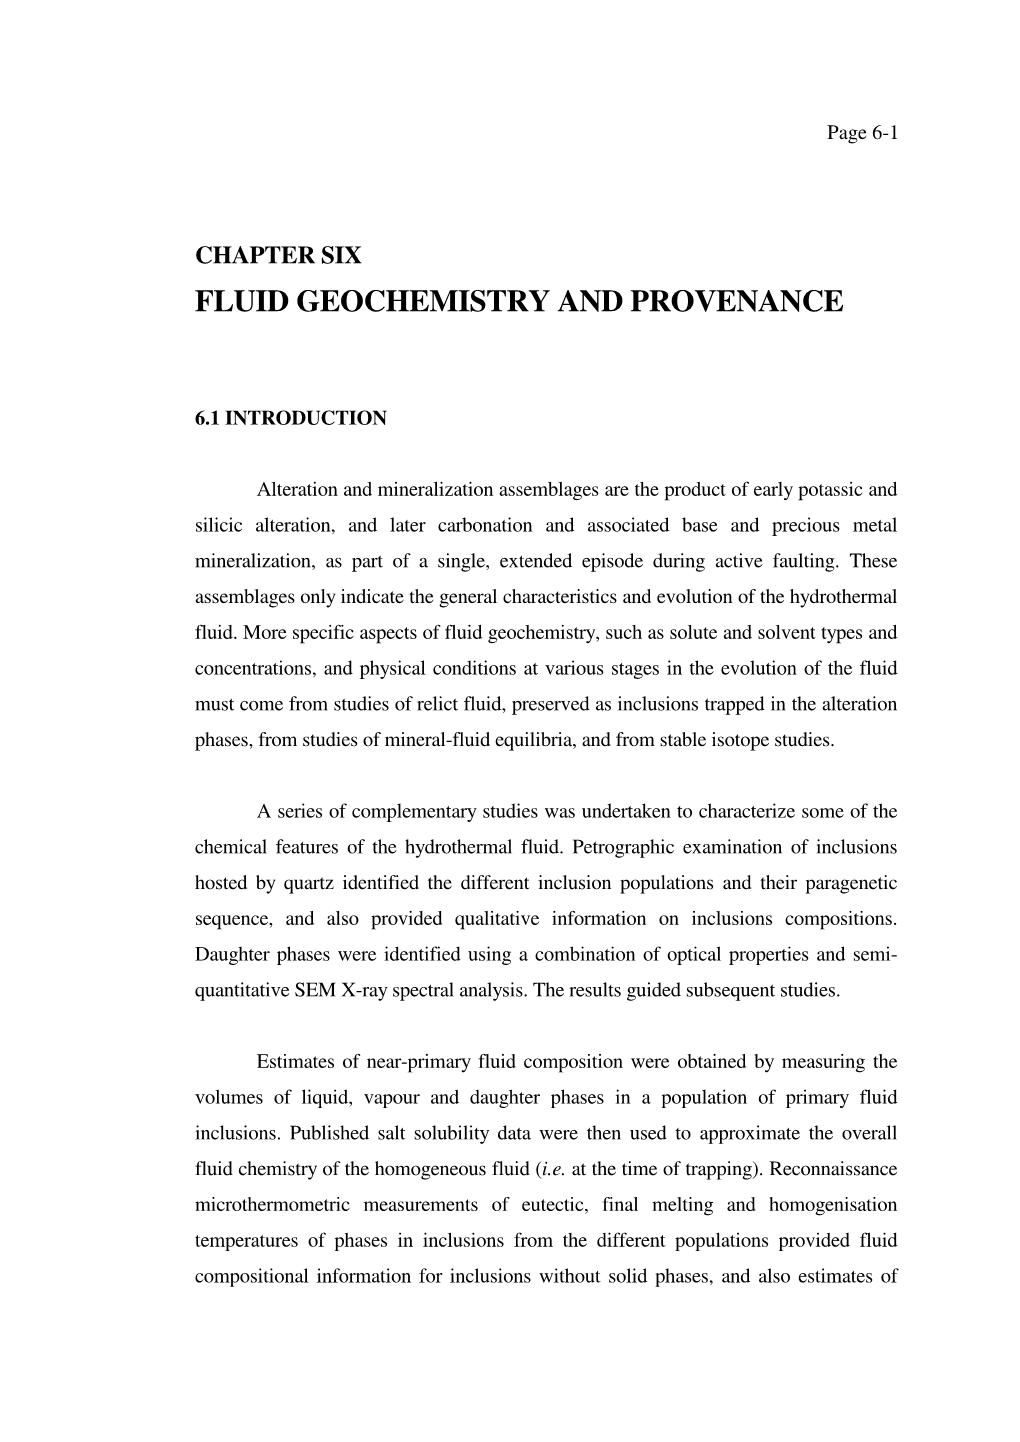 Chapter Six Fluid Geochemistry and Provenance